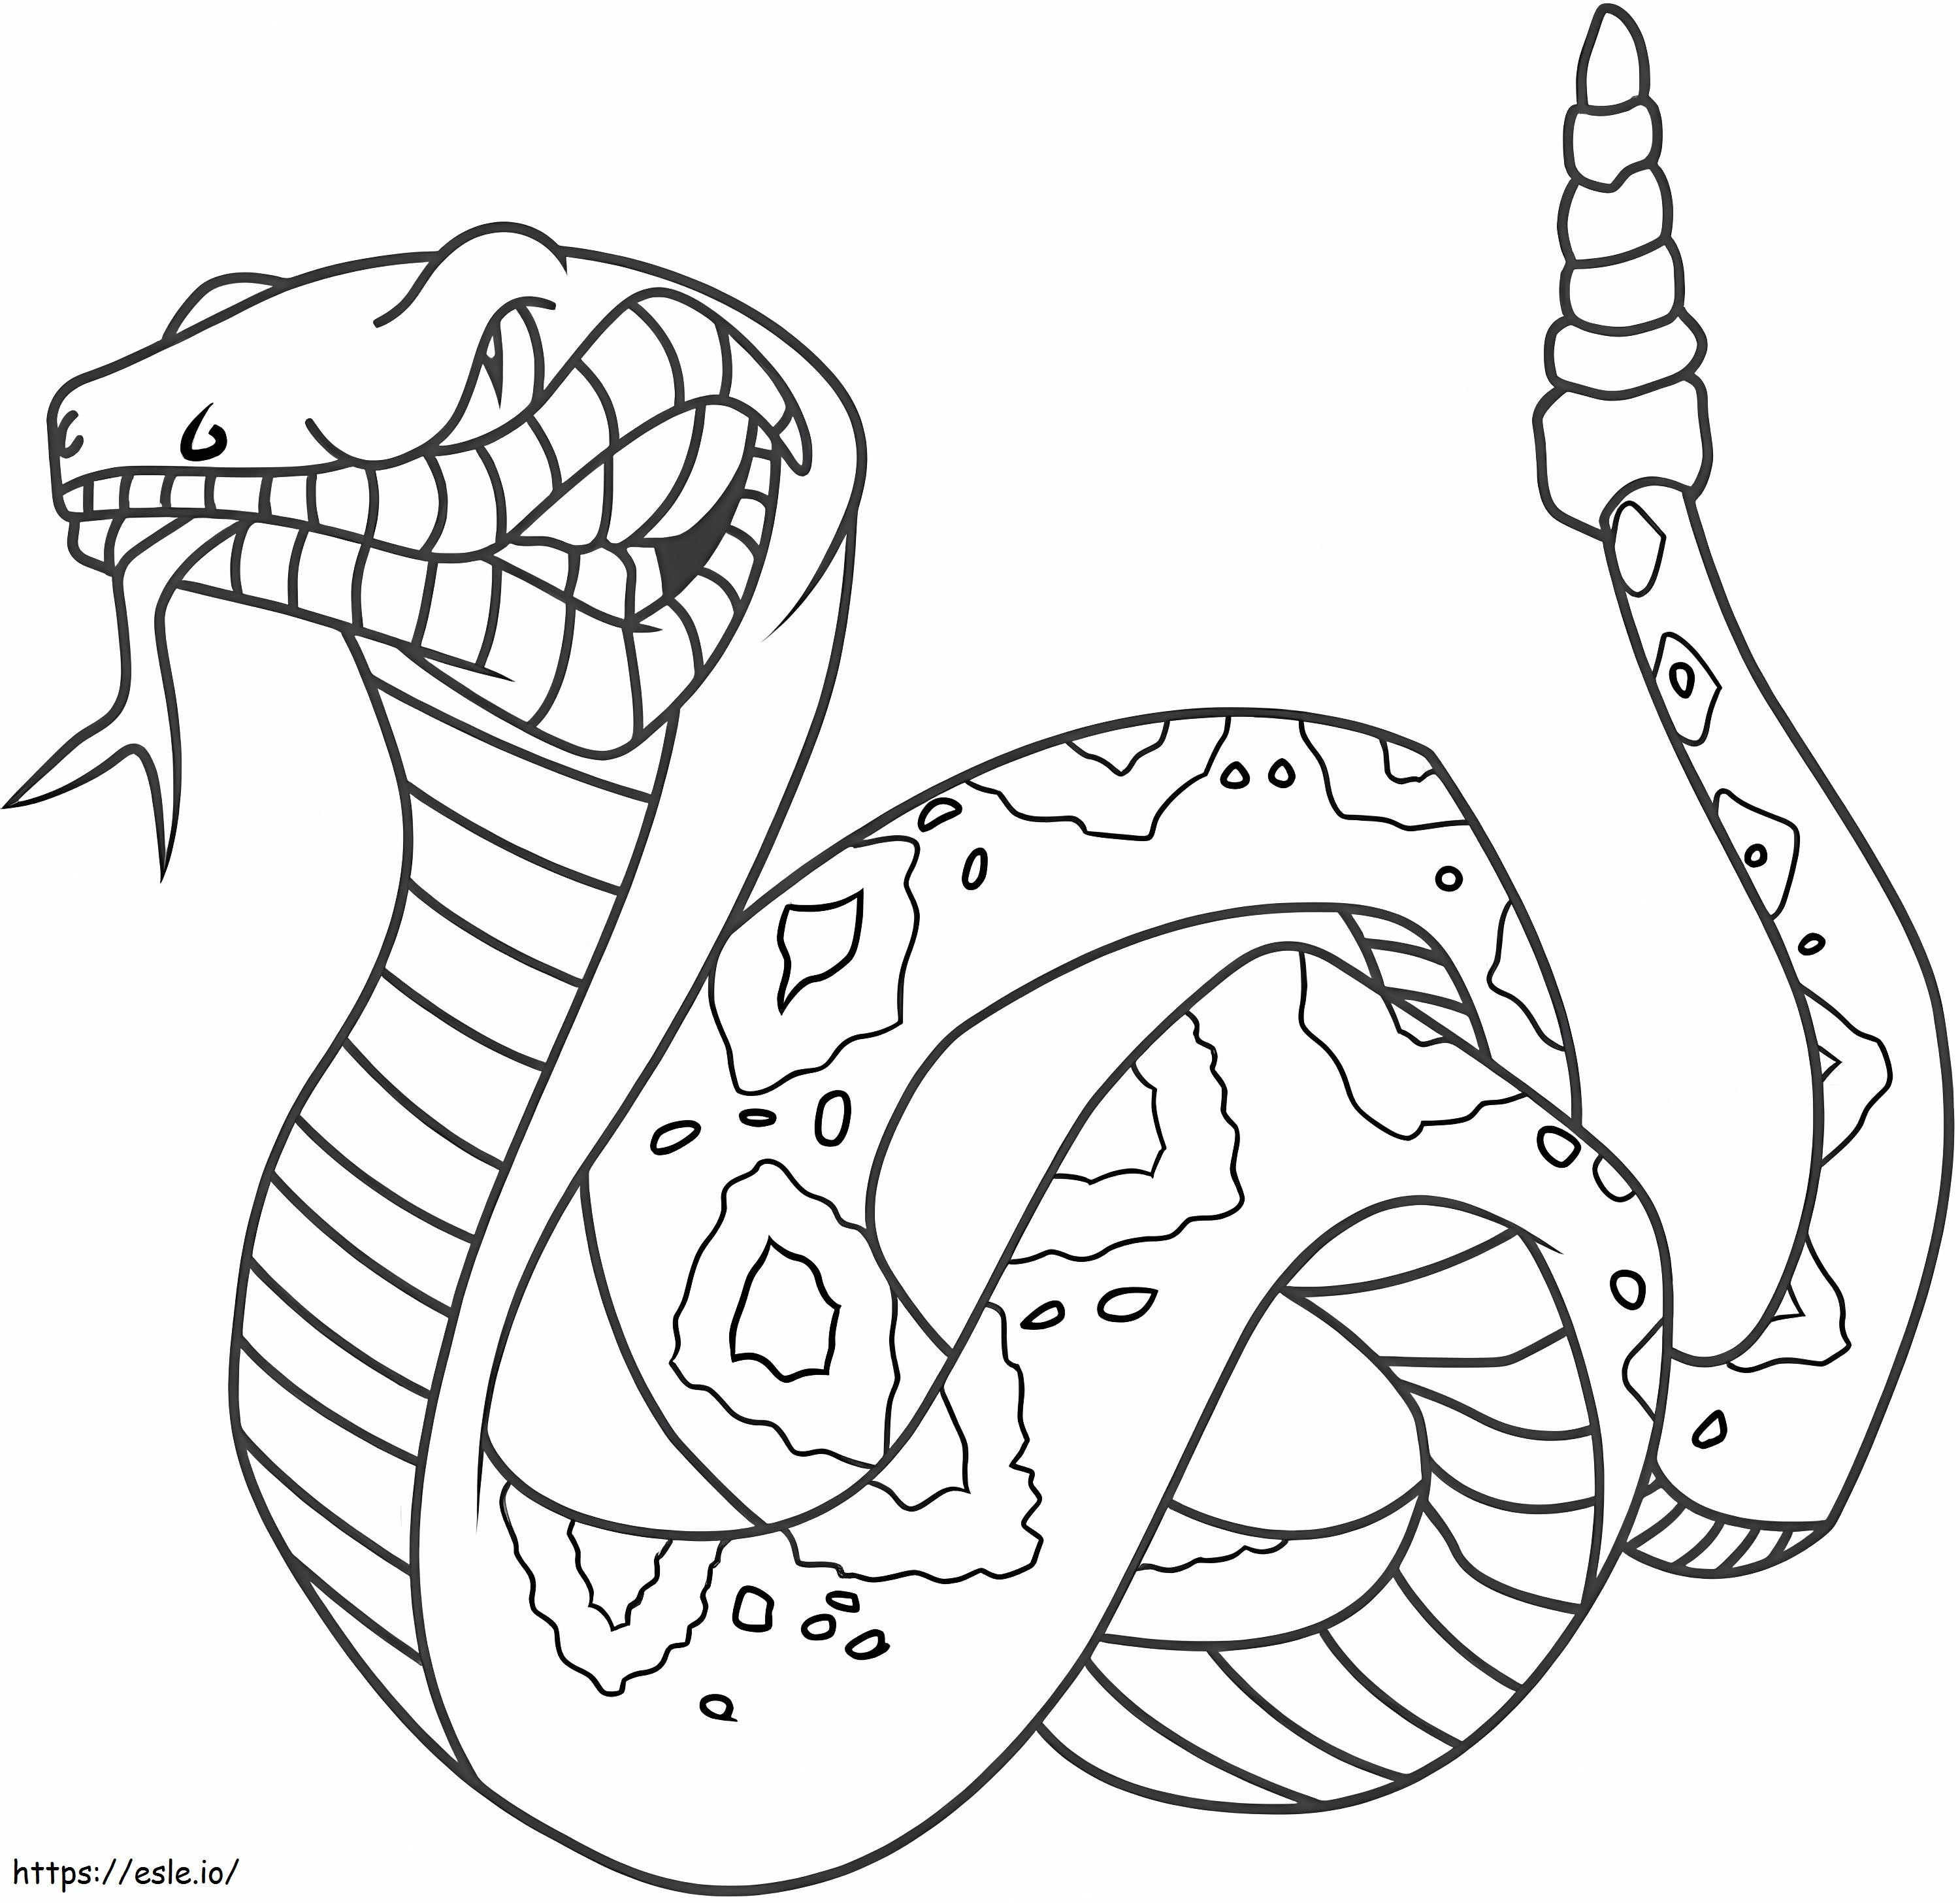 Coloriage Imprimer Serpent à imprimer dessin